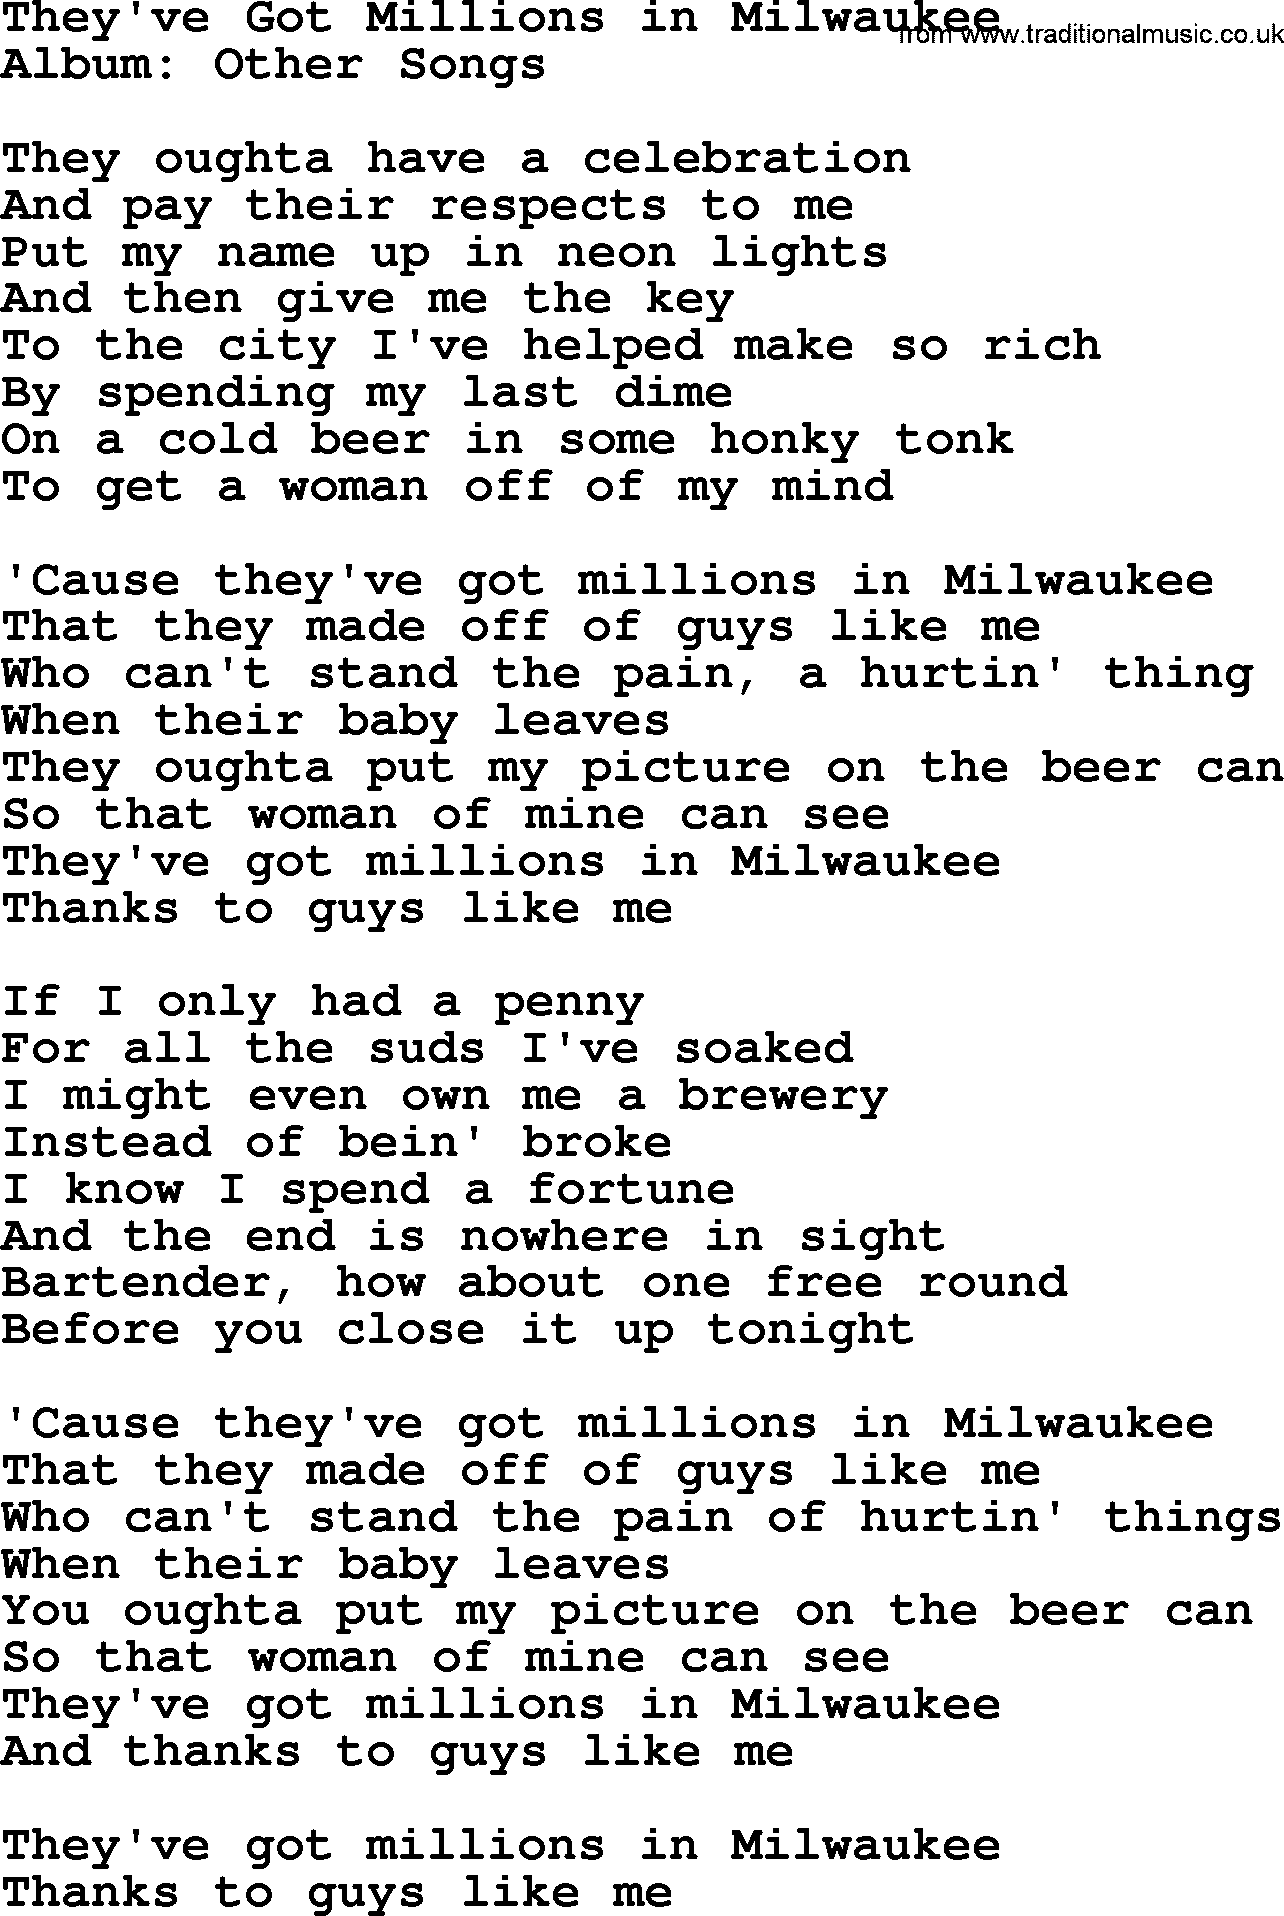 George Jones song: They've Got Millions In Milwaukee, lyrics